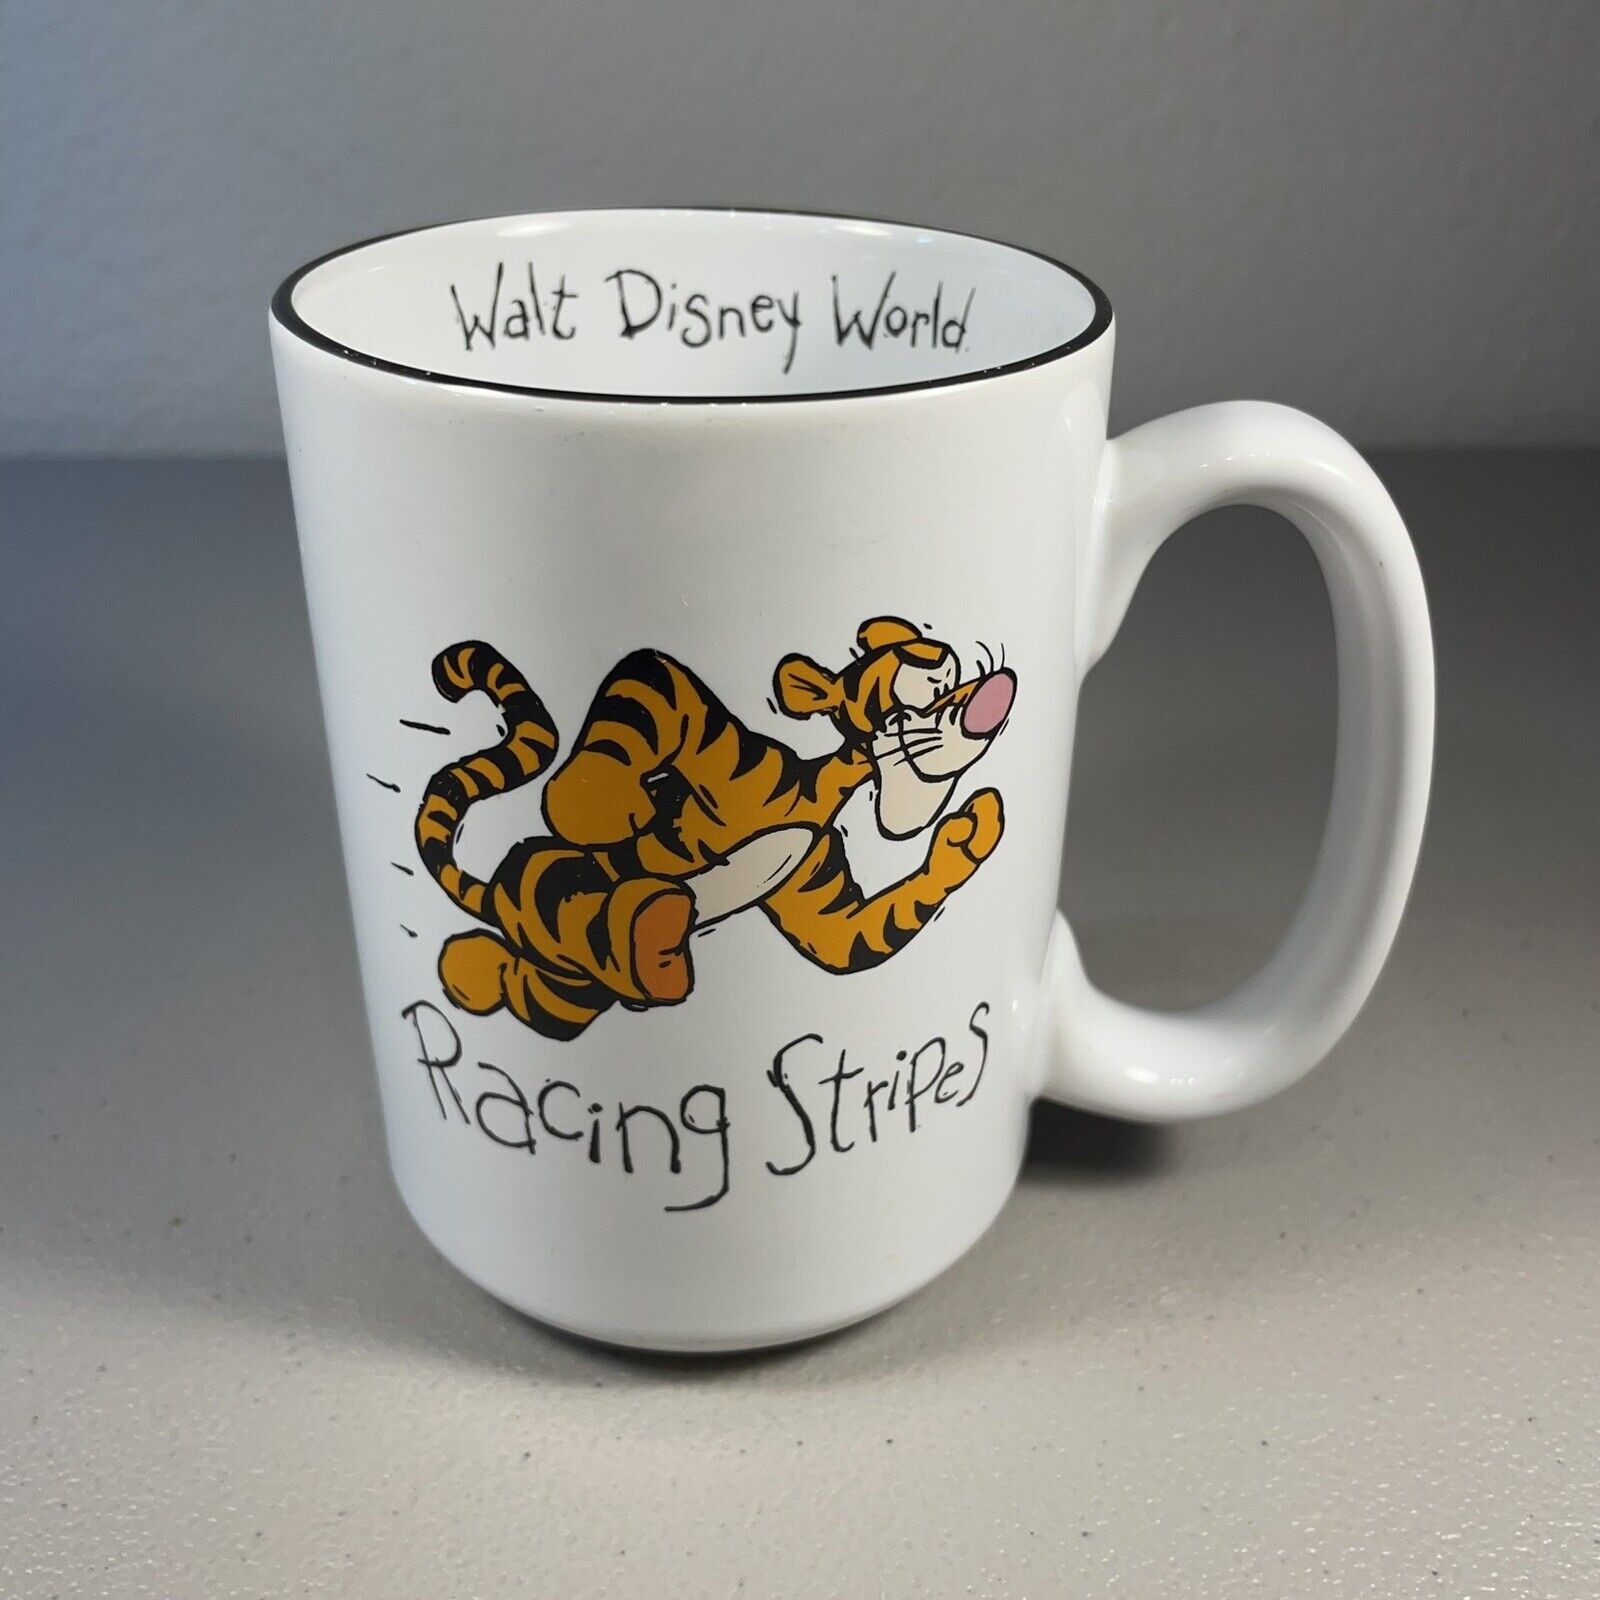 Walt Disney World Tigger from Winnie the Pooh Racing Stripes Coffee Mug Cup USED